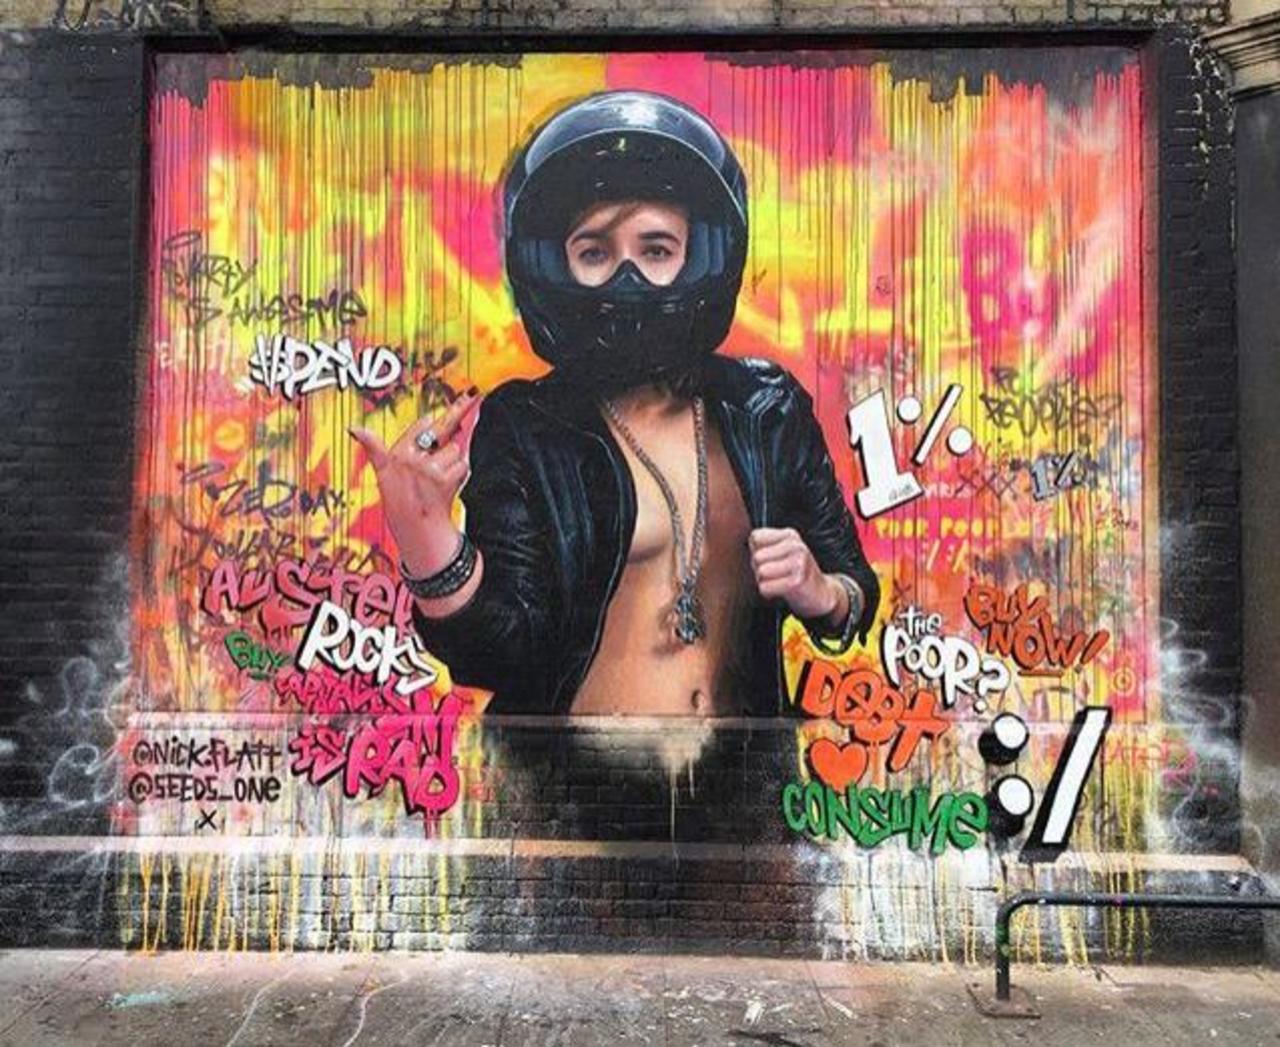 New Street Art collab by Nick Flatt &  Seeds One in London 

#art #graffiti #mural #streetart http://t.co/rBd3OyUijx